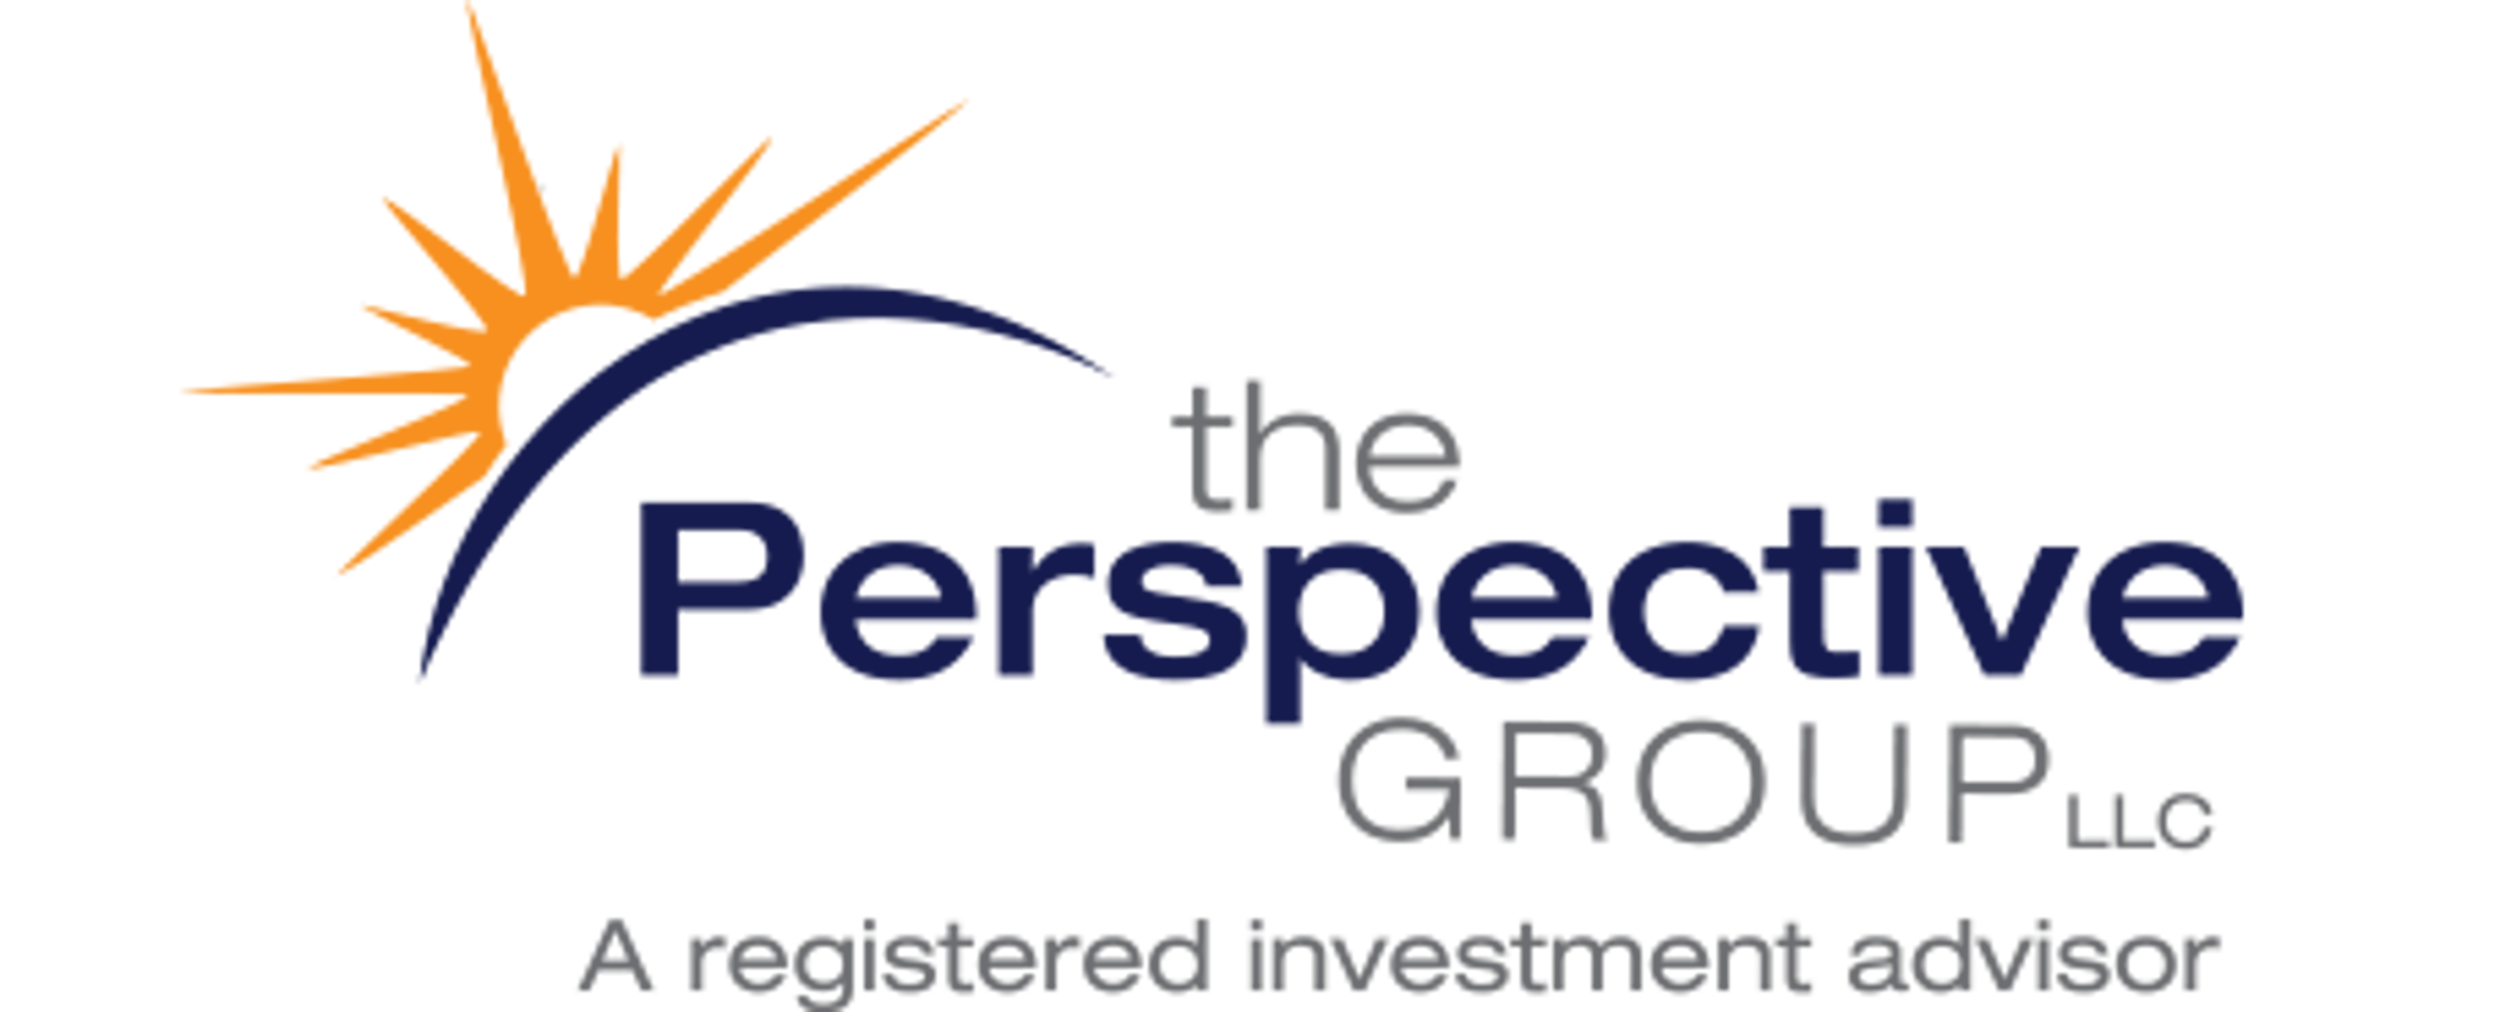 ThePerspectveGroup LLC RIA Logo.png